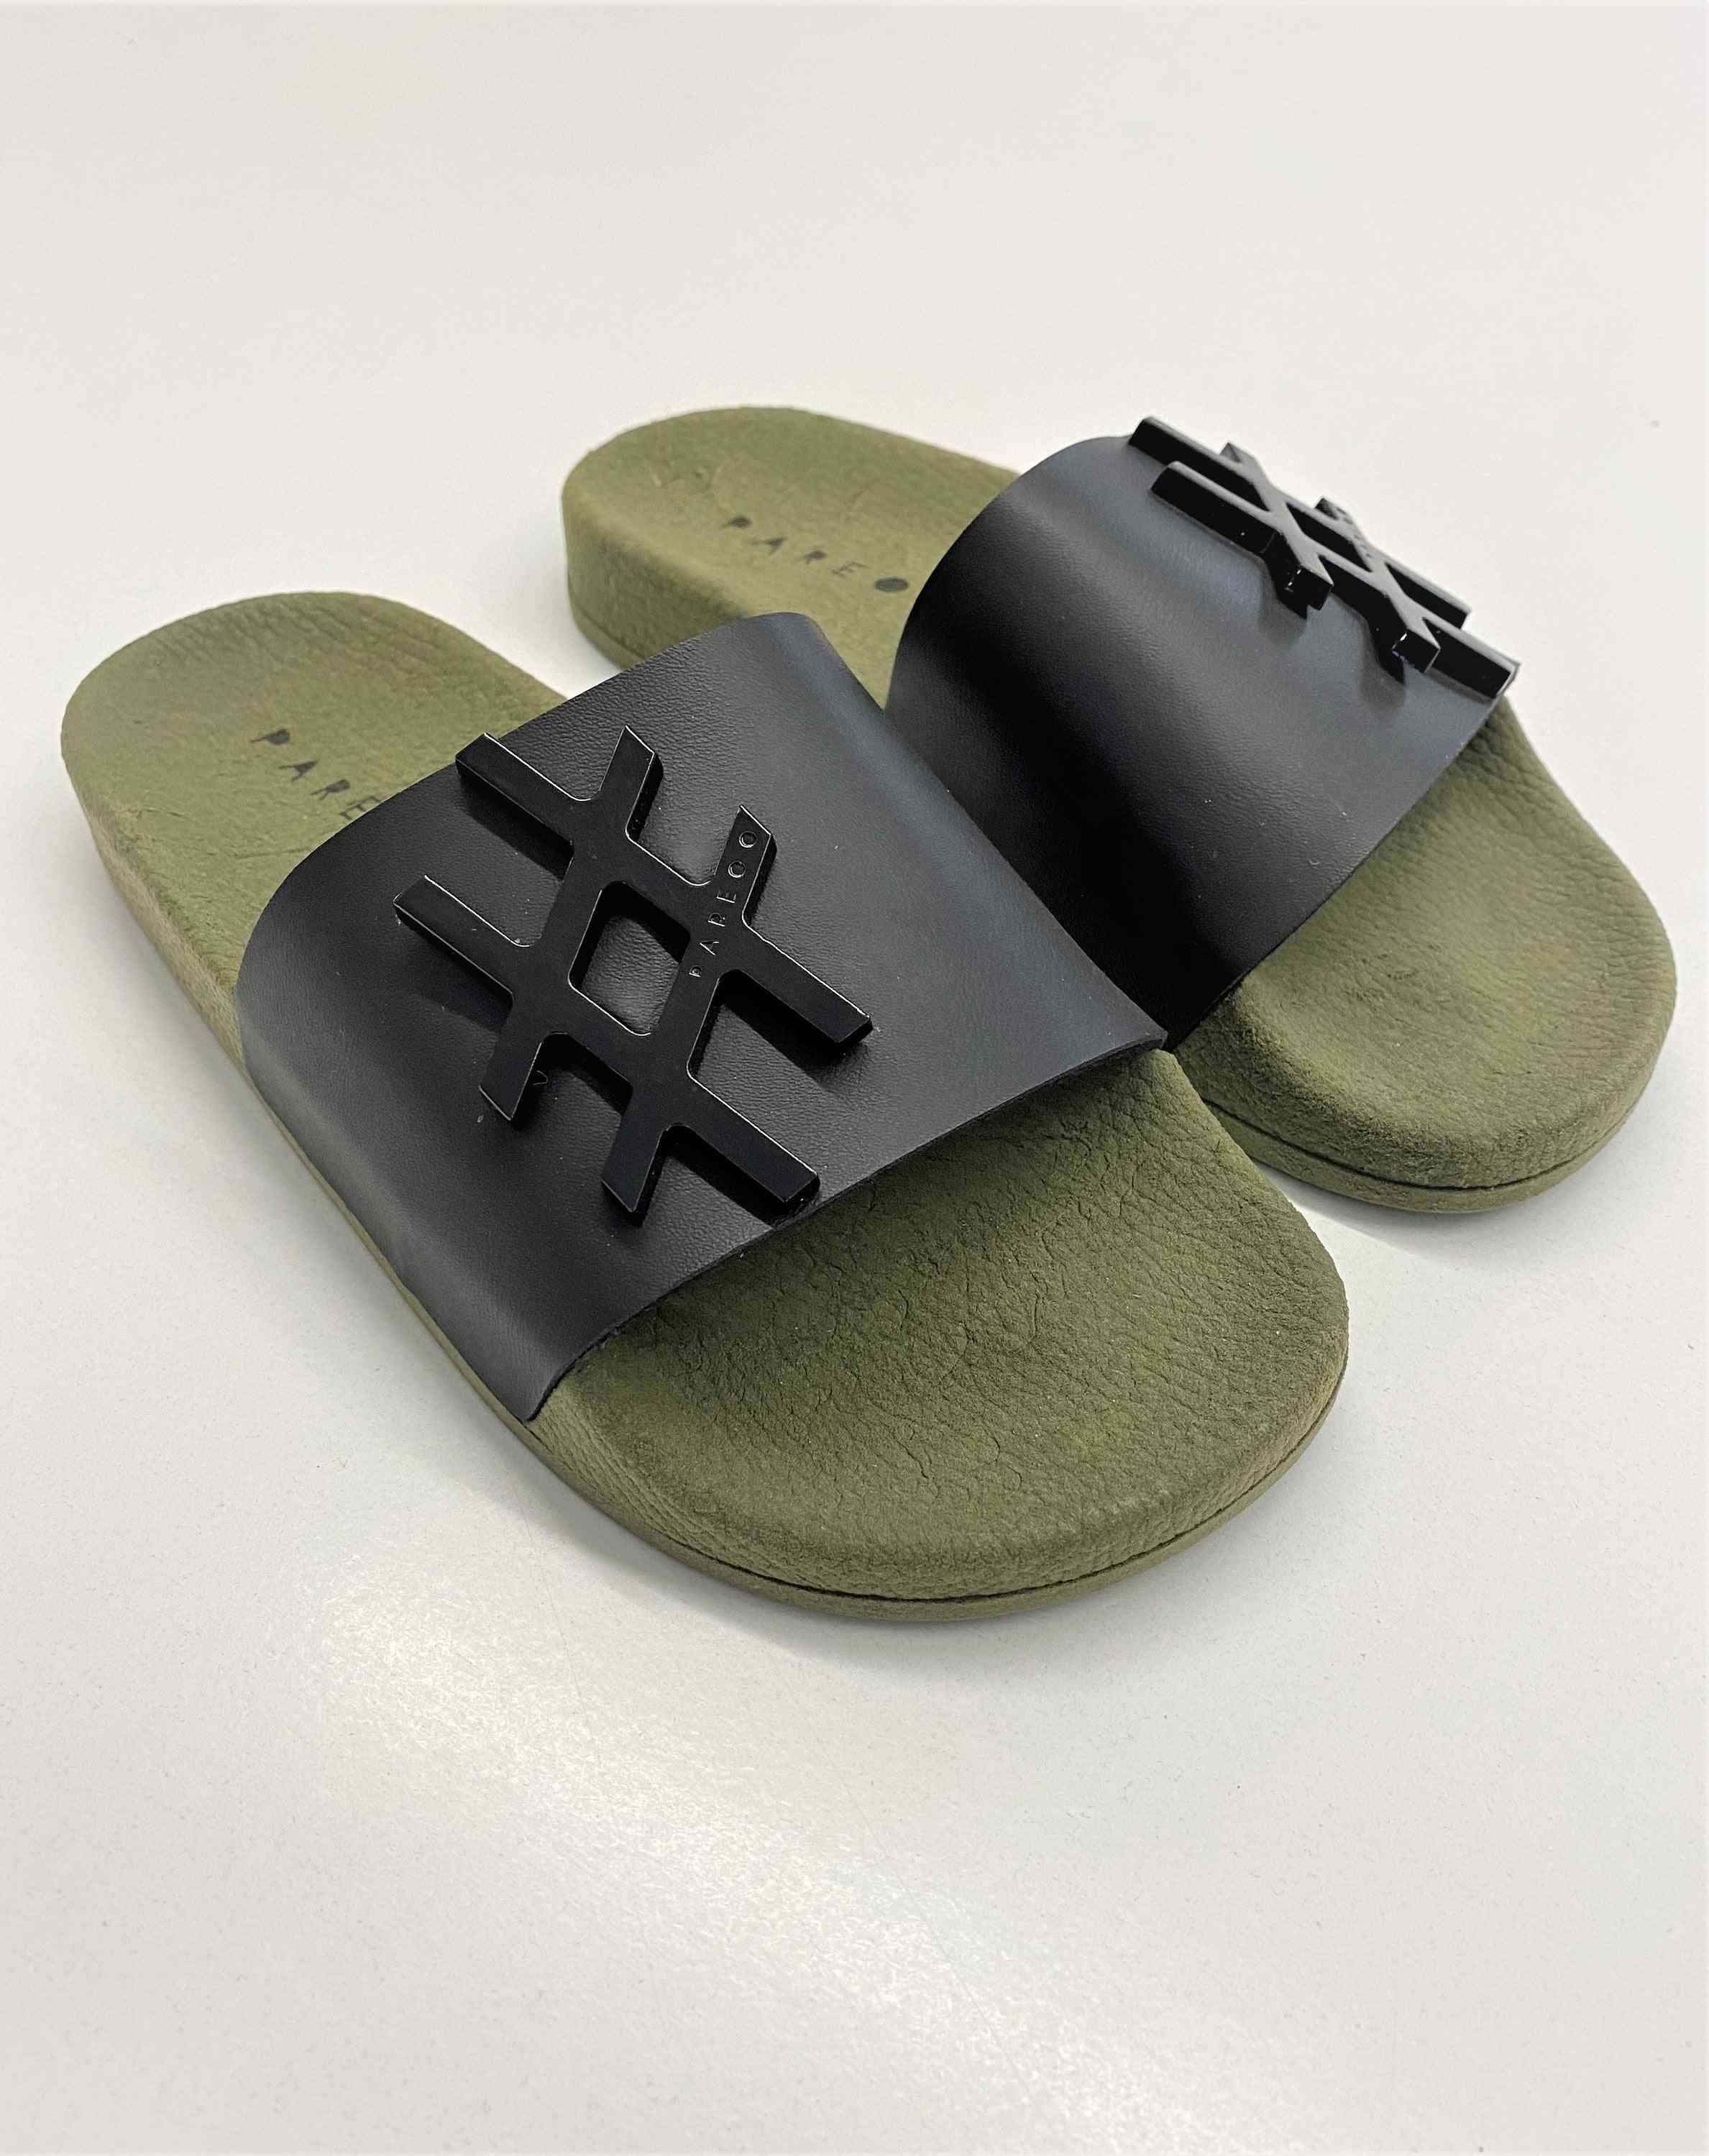 Hashtag metallemblem- slides slipper sandal